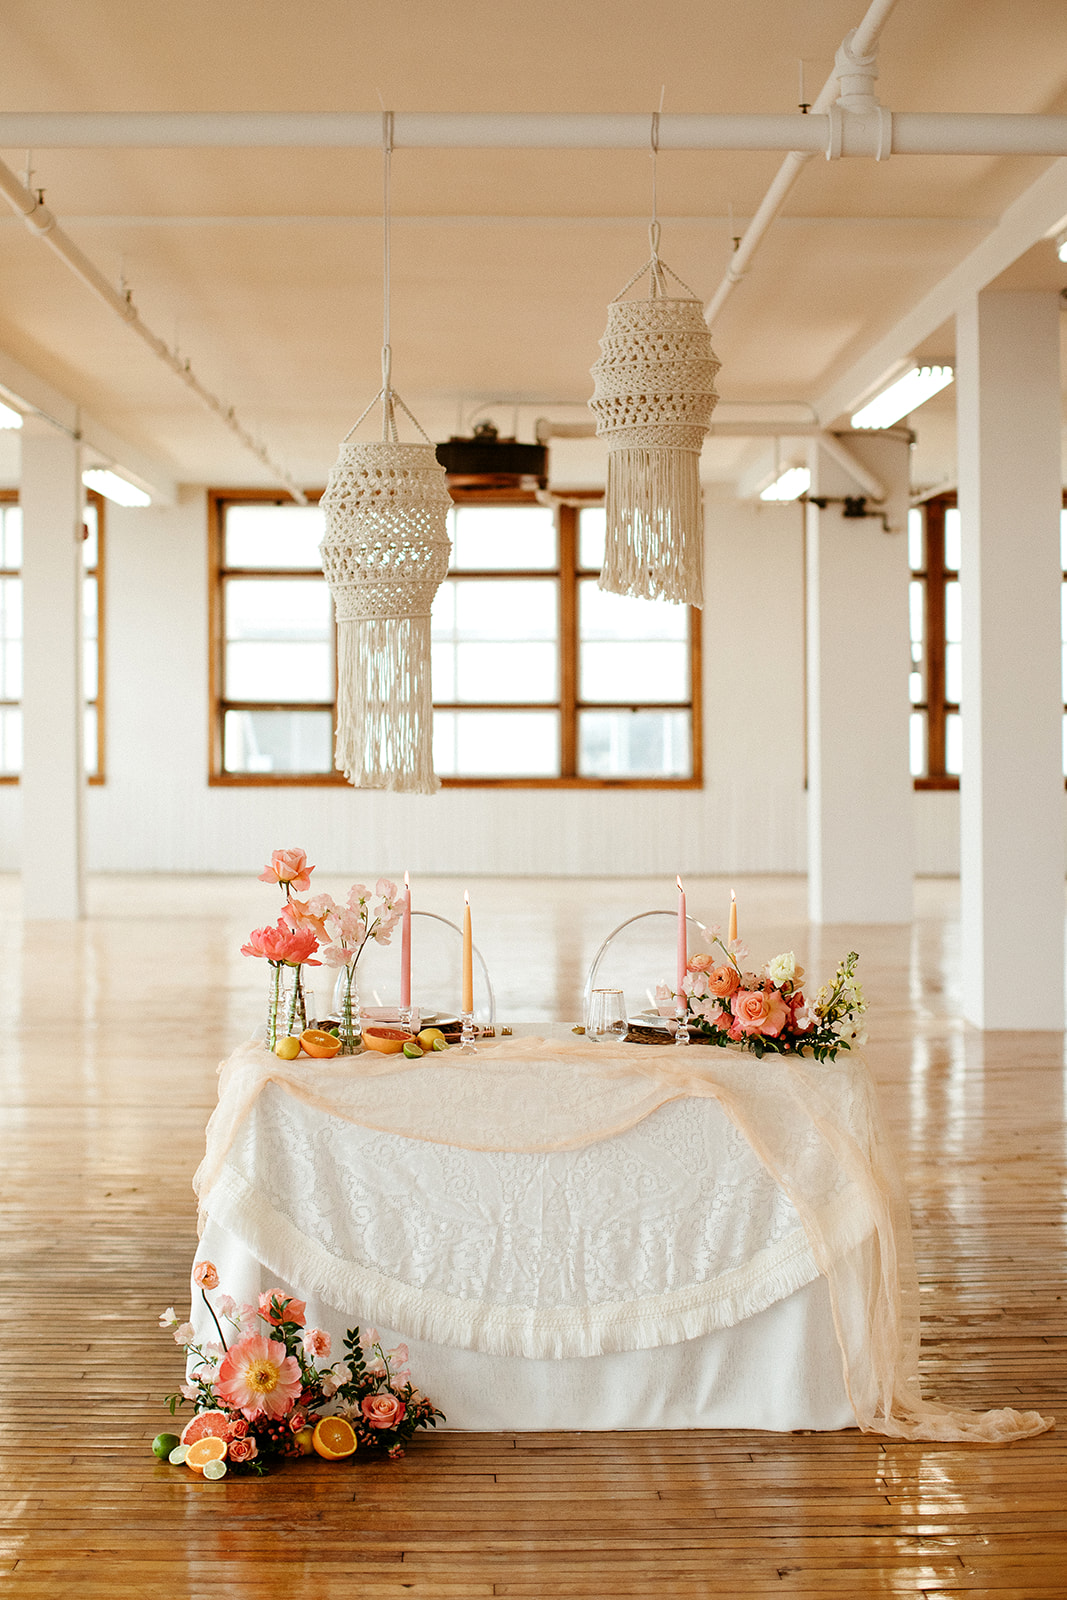 Macrame hanging above a bold citrus tablescape for this unique diy ceremony design